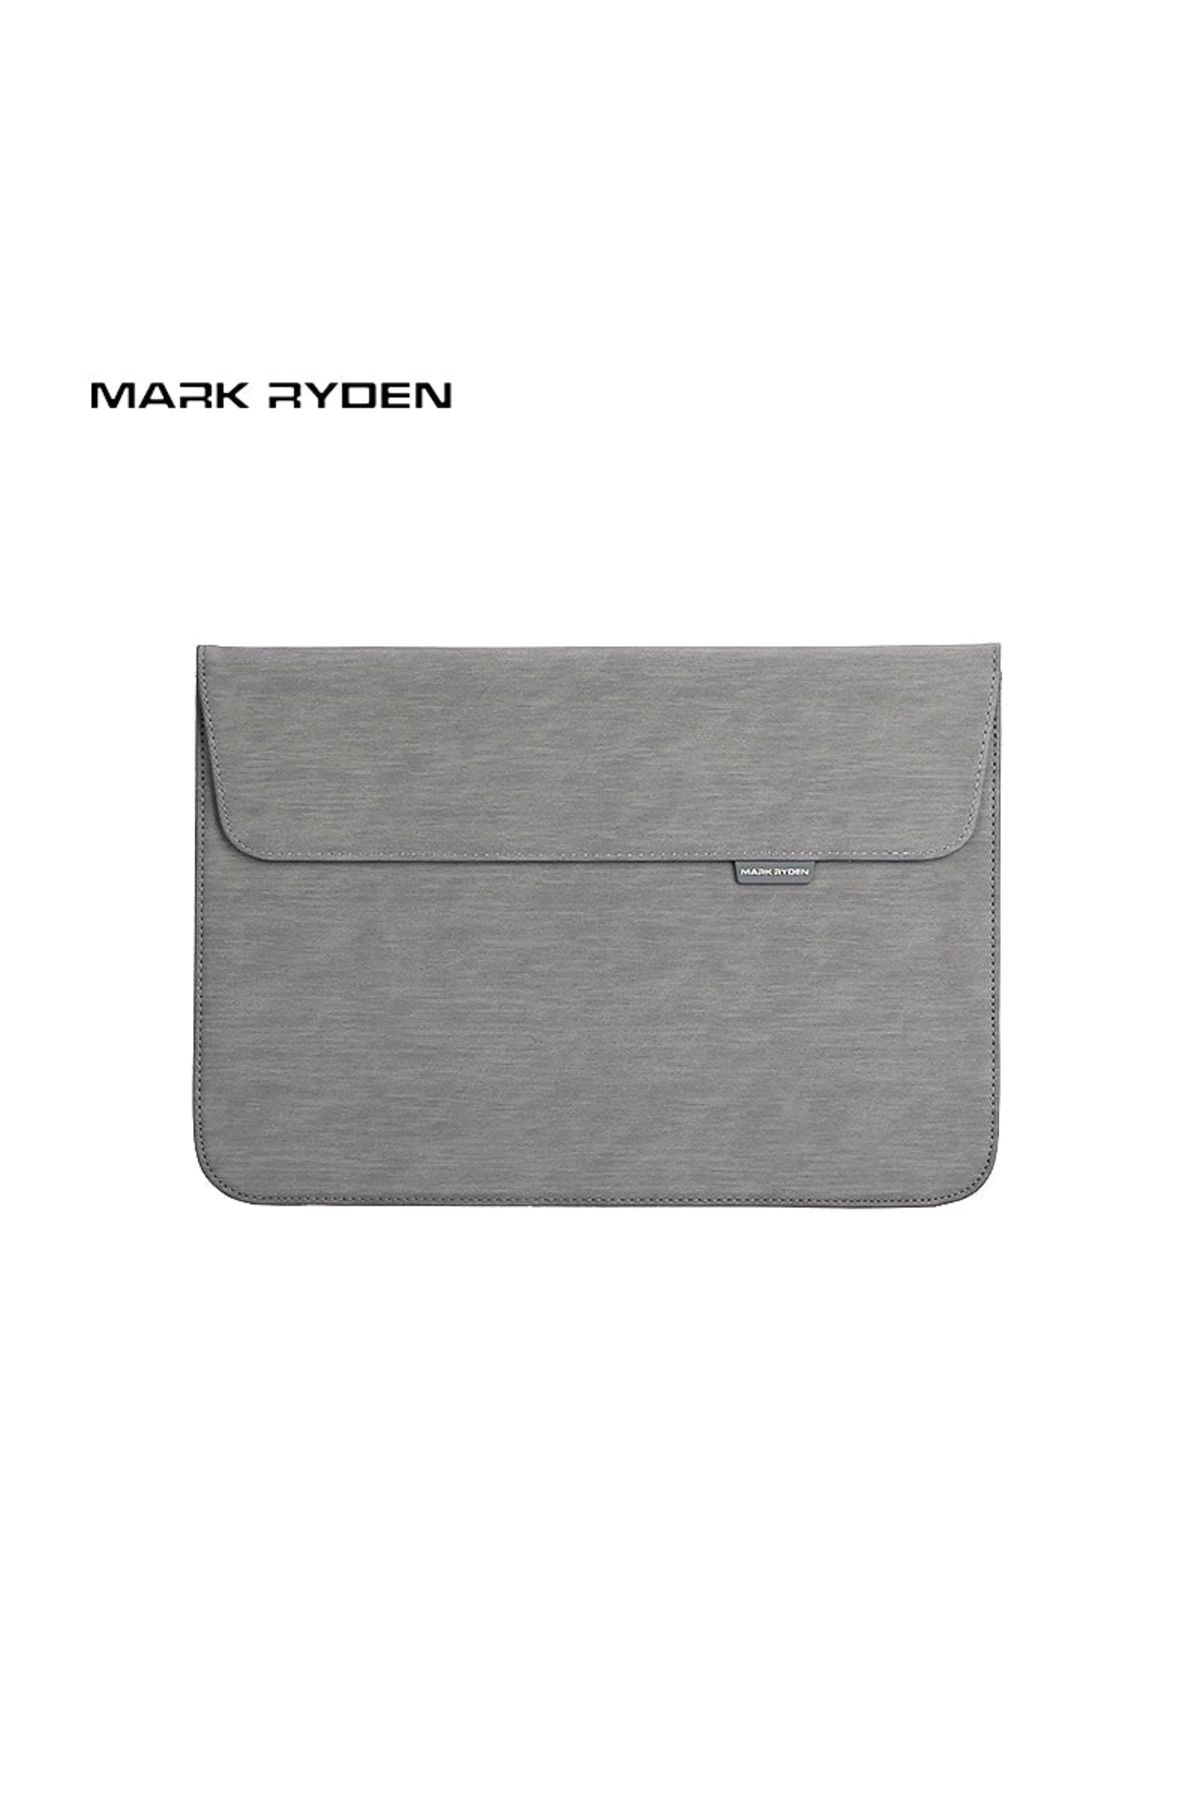 Mark Ryden Notebook Kılıfı 13.3 inch Beyefendi Gri  L_MR67X_17